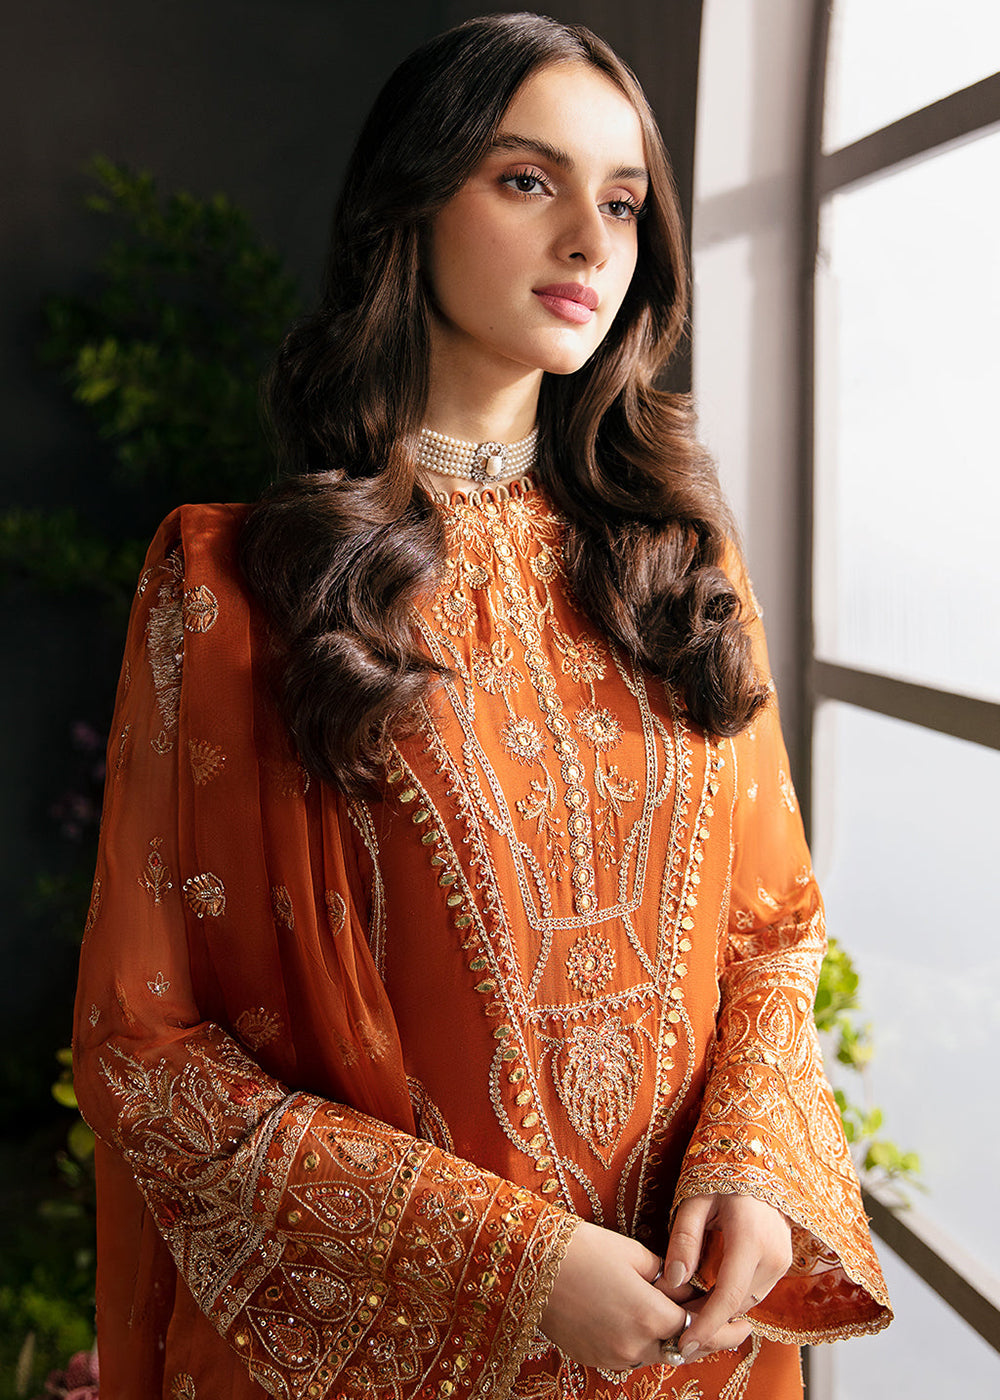 Buy Now Orange Pakistani Palazzo Suit - Afrozeh La Fuchsia Formals '23 - Russet Online in USA, UK, Canada & Worldwide at Empress Clothing.